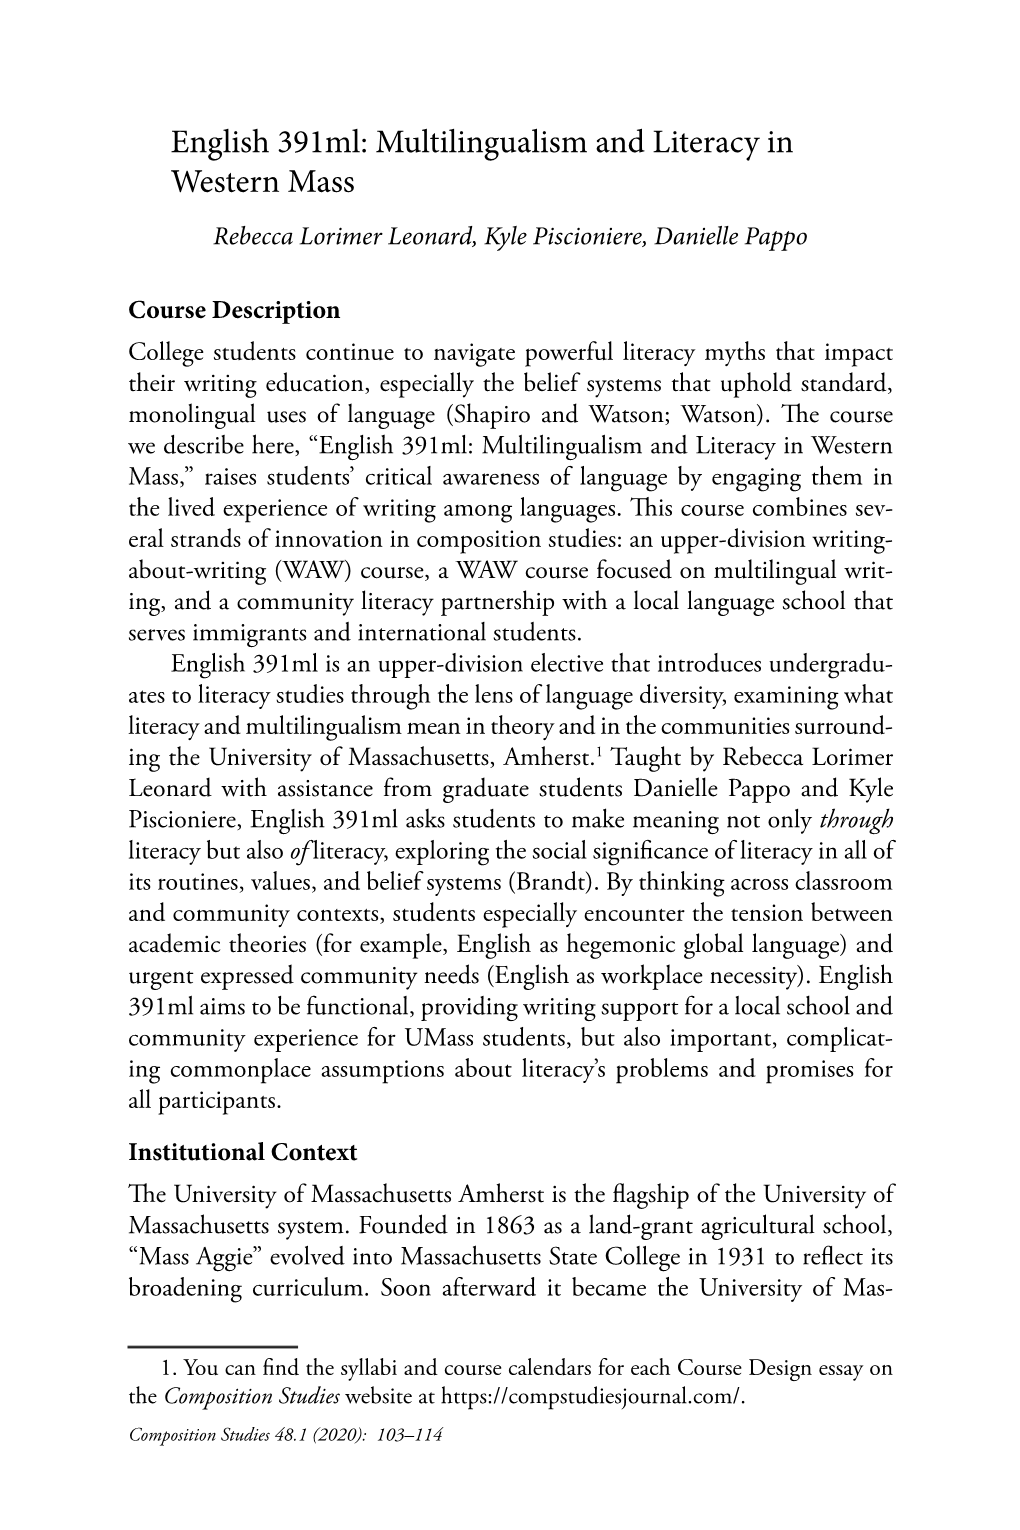 English 391Ml: Multilingualism and Literacy in Western Mass Rebecca Lorimer Leonard, Kyle Piscioniere, Danielle Pappo